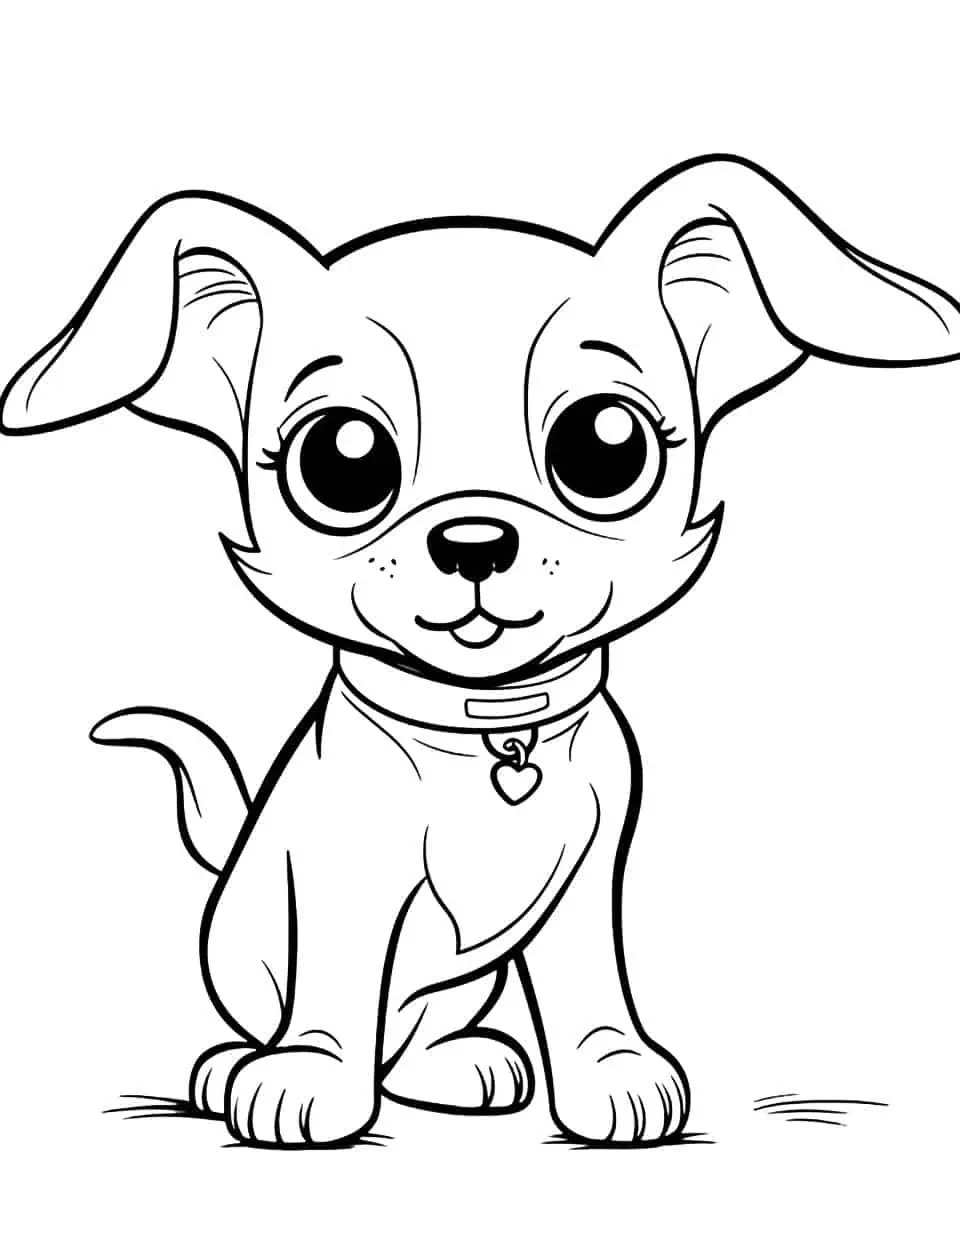 Kawaii Chihuahua Dog Coloring Page - A coloring page featuring a super cute, kawaii-style Chihuahua with big eyes.